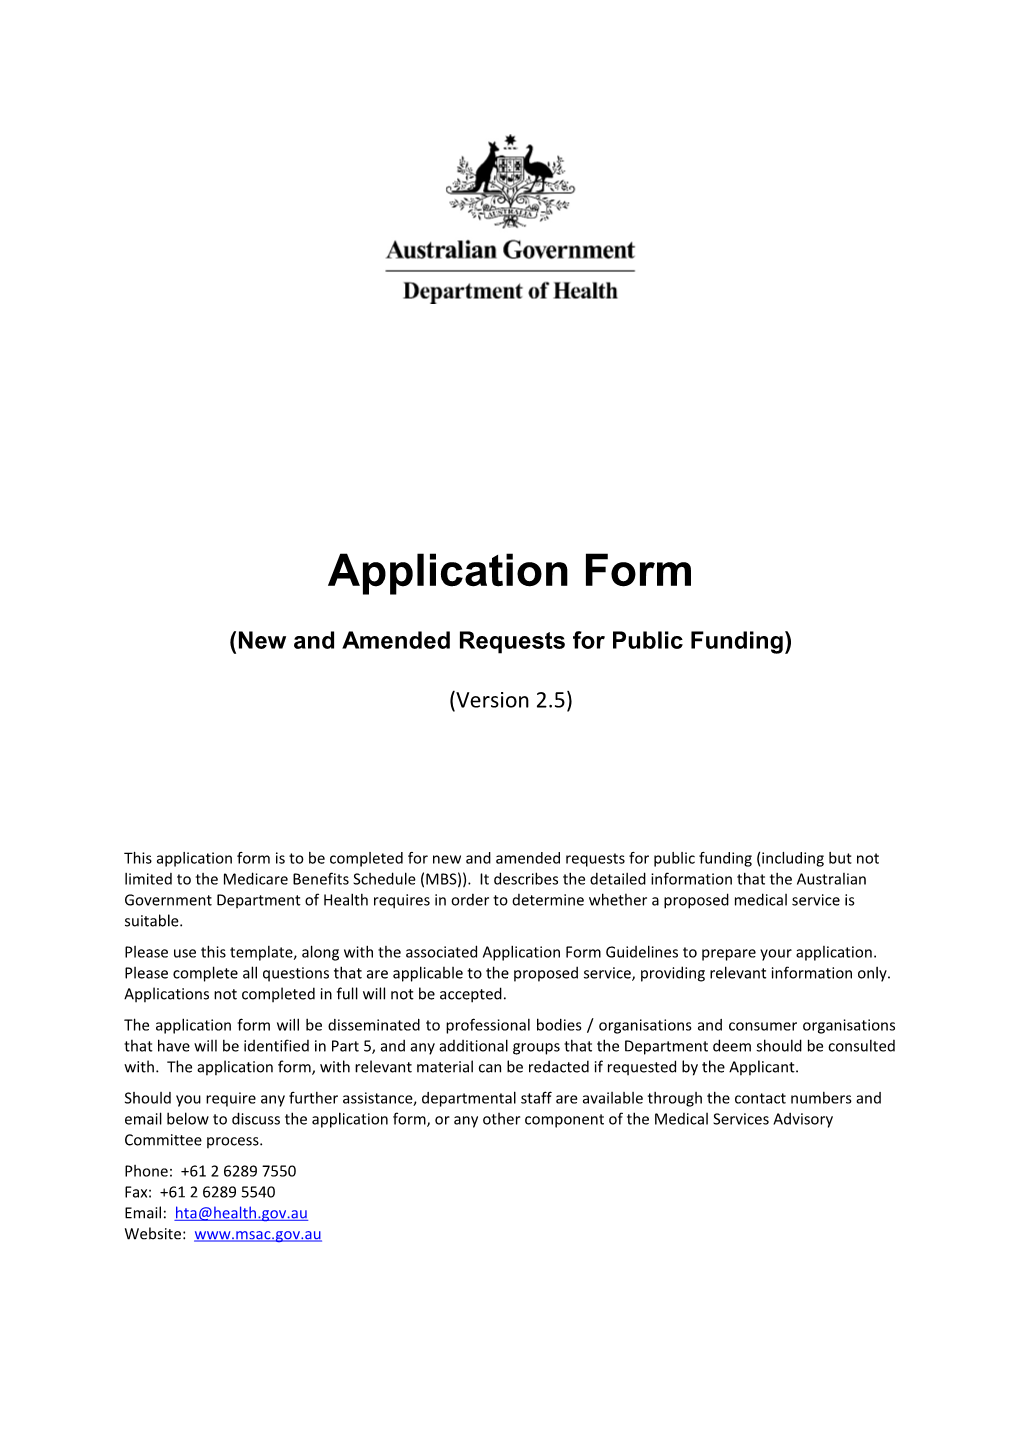 MSAC Application Form